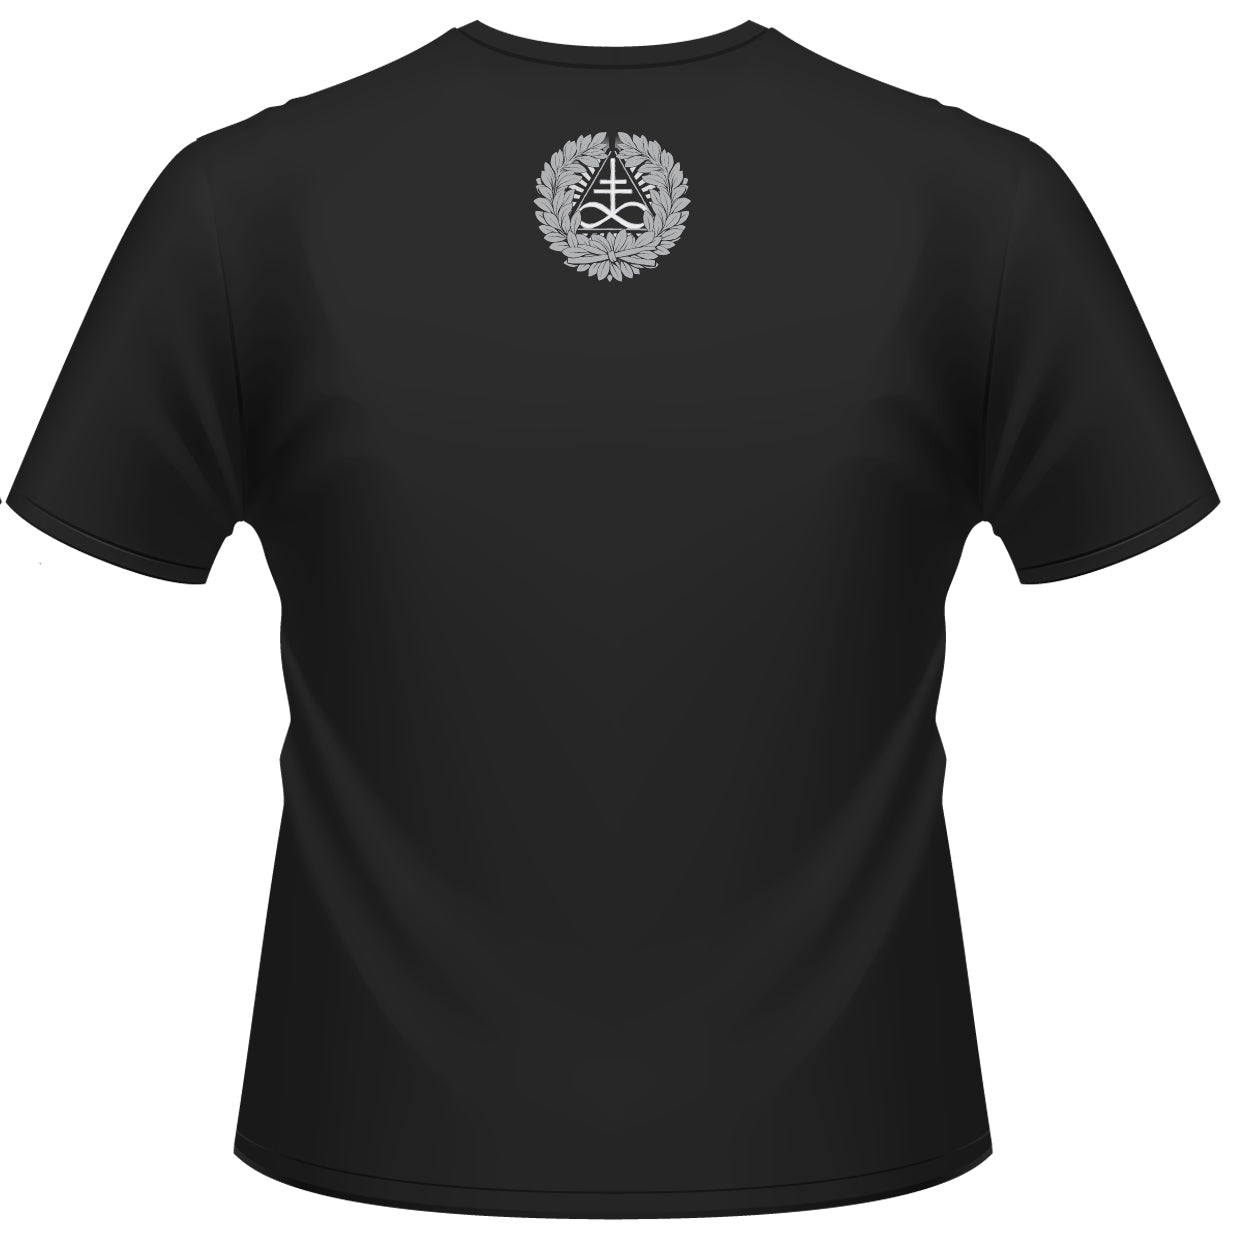 Behemoth - Abyssus Abyssum Invocat - T-Shirt Unisex Officiell Merch